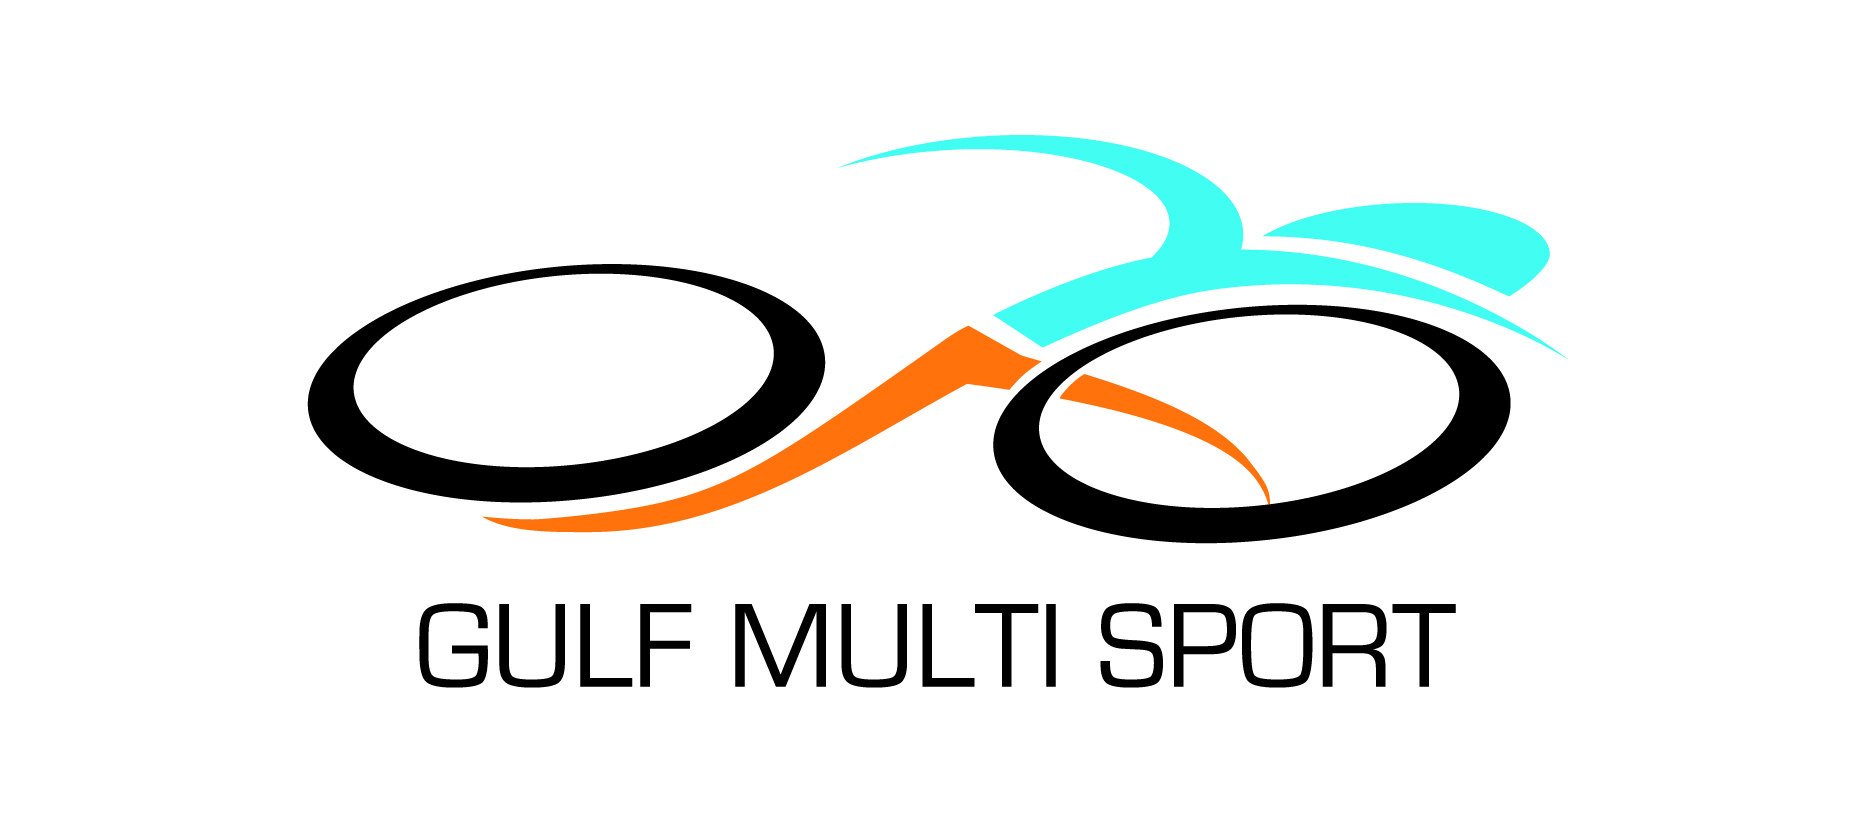 Gulf MultiSport